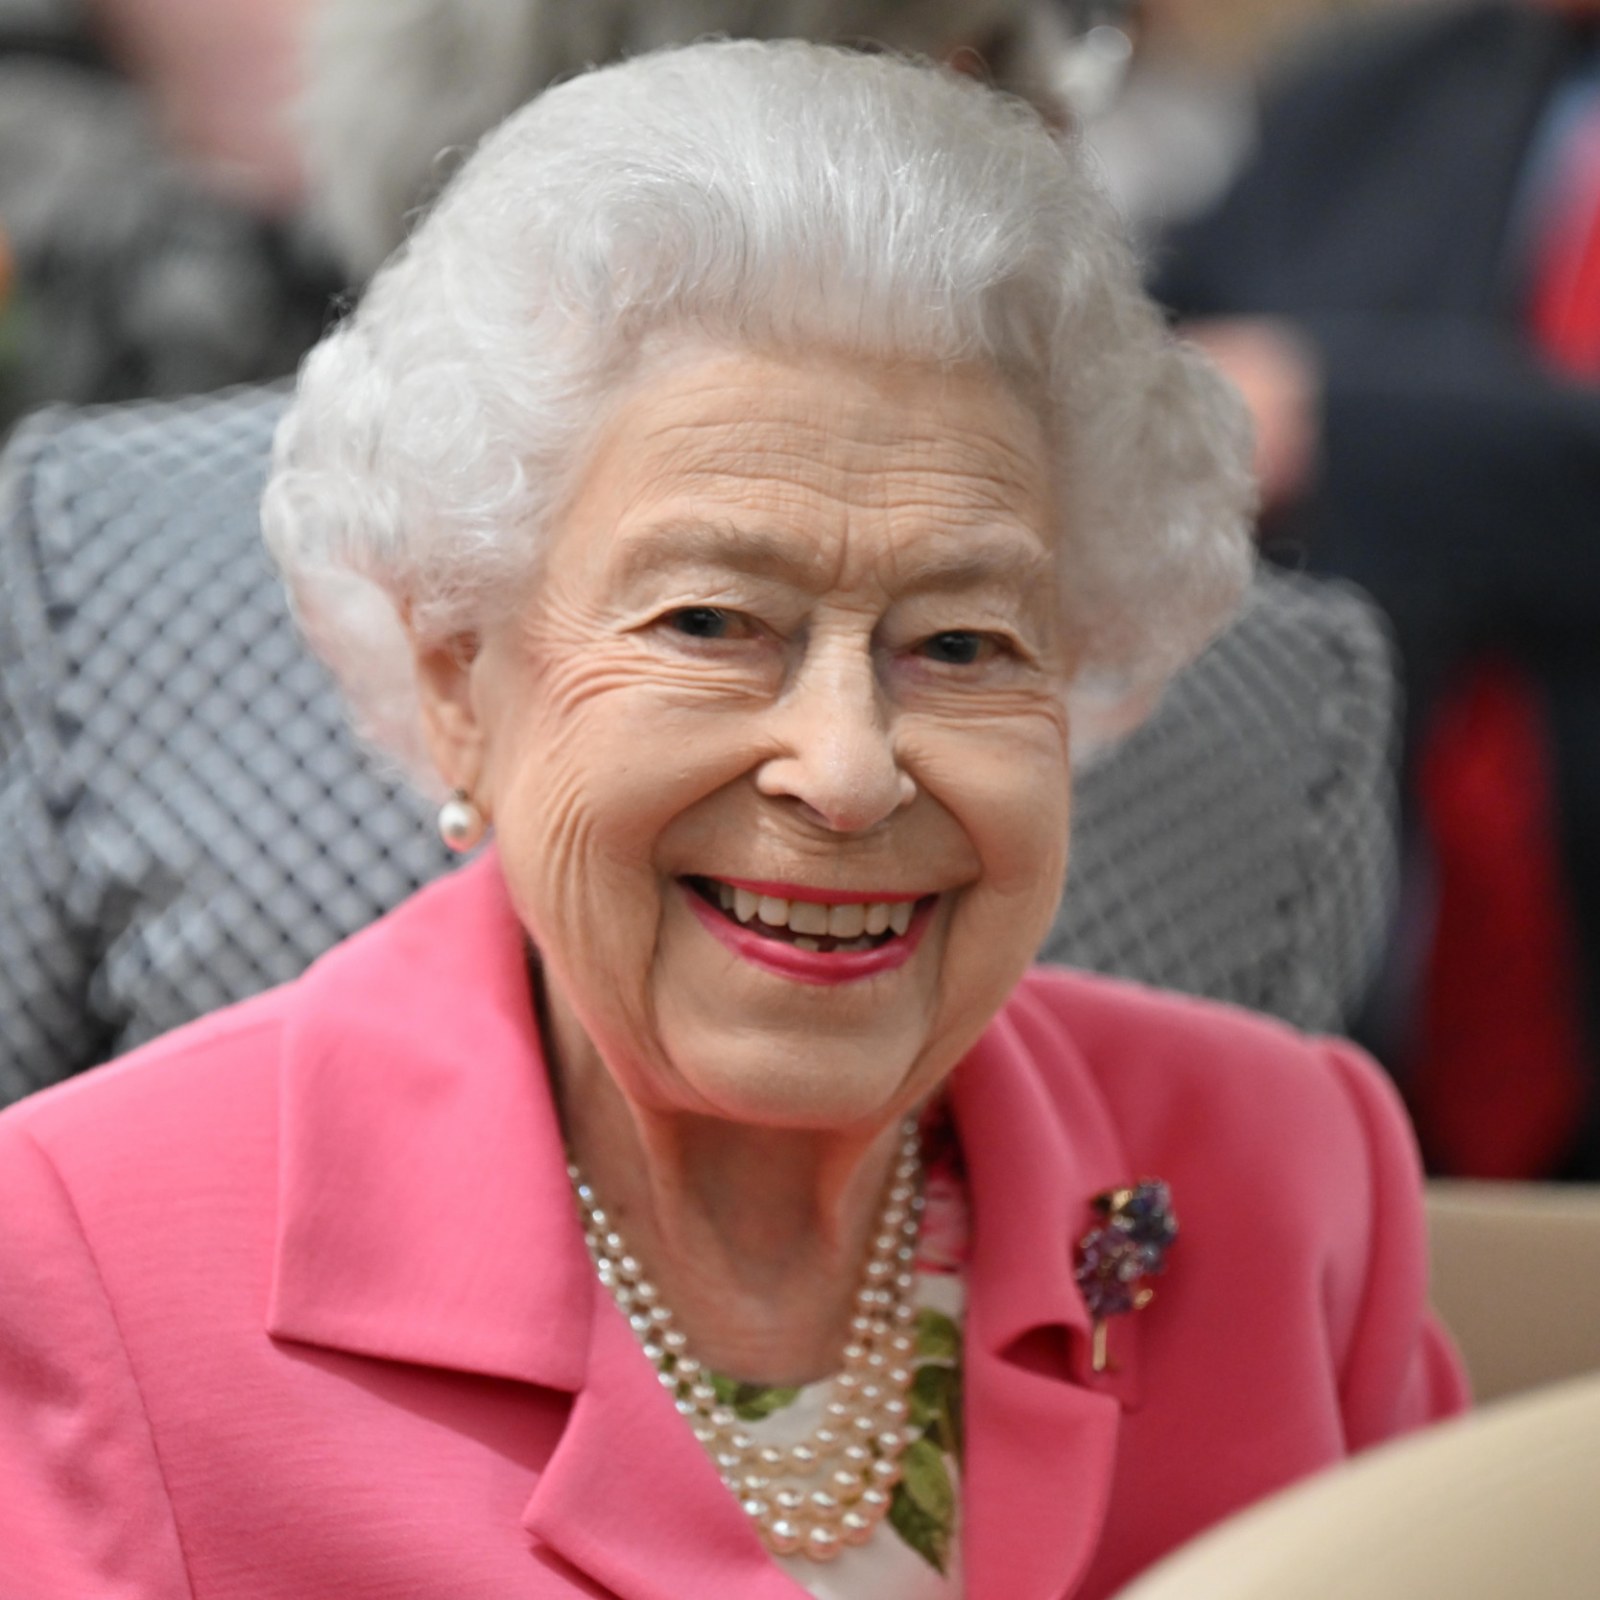 Breaking: Queen of England, Elizabeth II dies at 96 after health concern